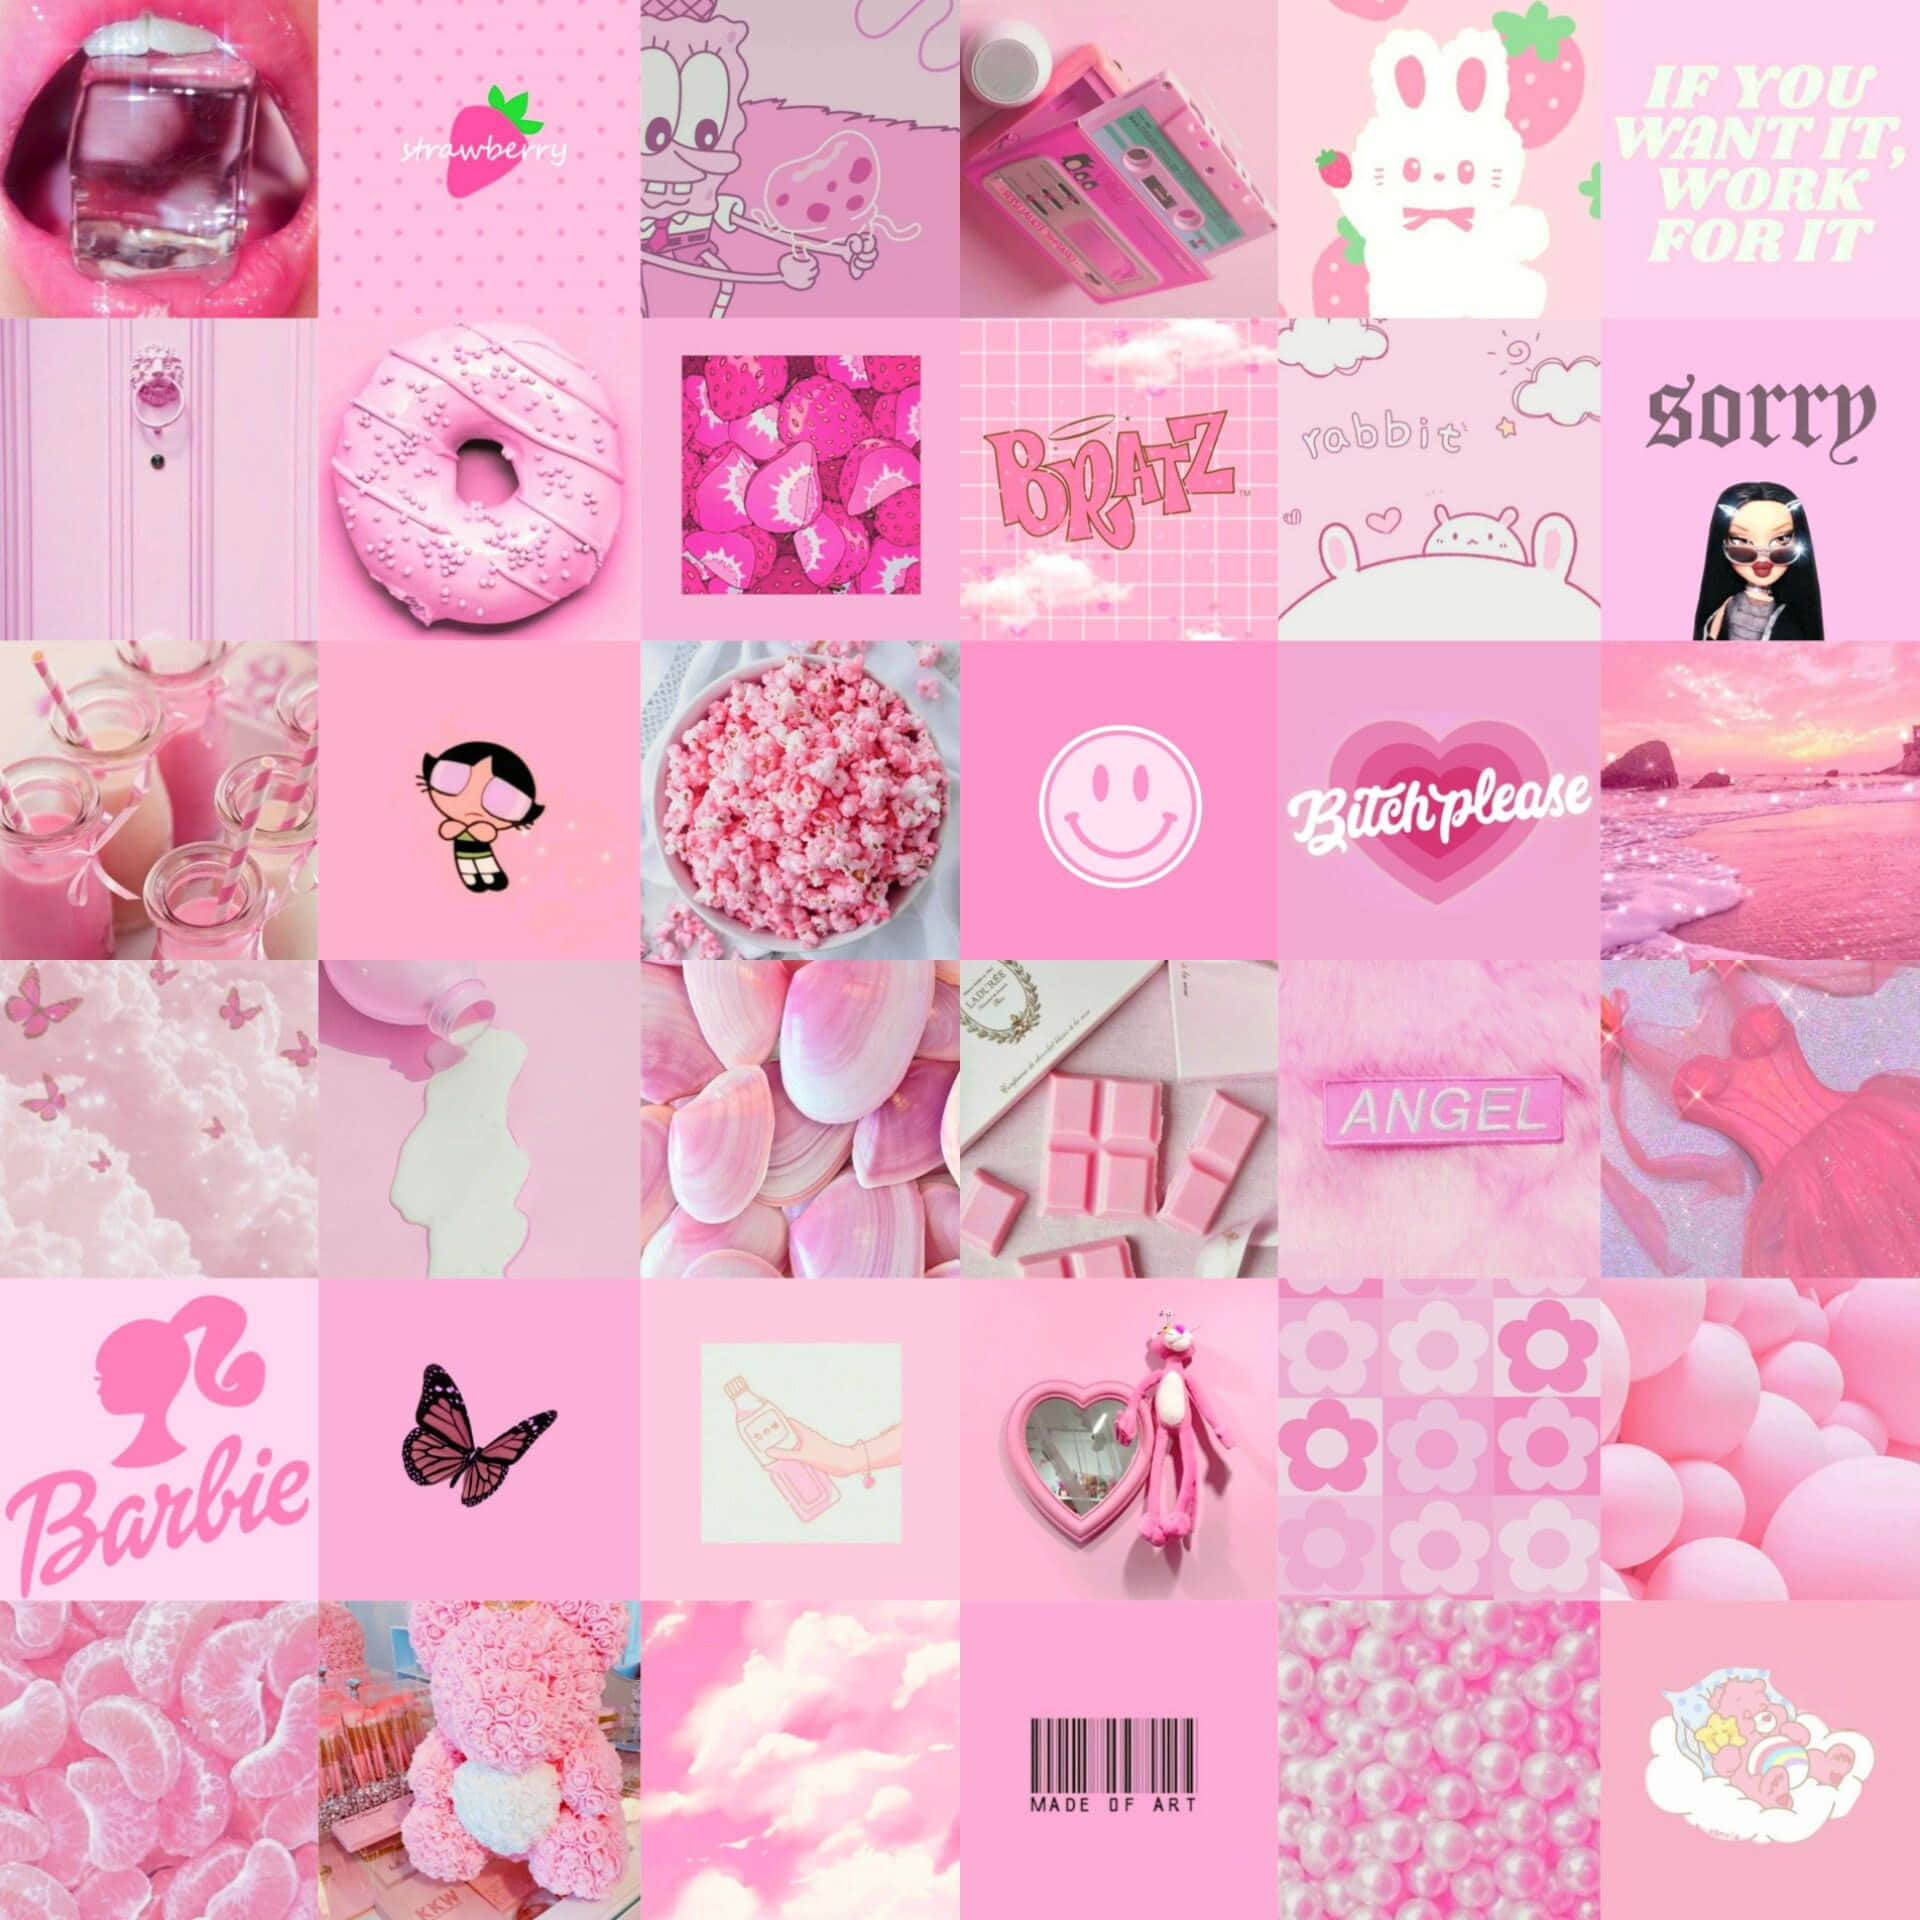 BARBIE X LV  Pink glitter wallpaper, Pink wallpaper girly, Pink wallpaper  iphone